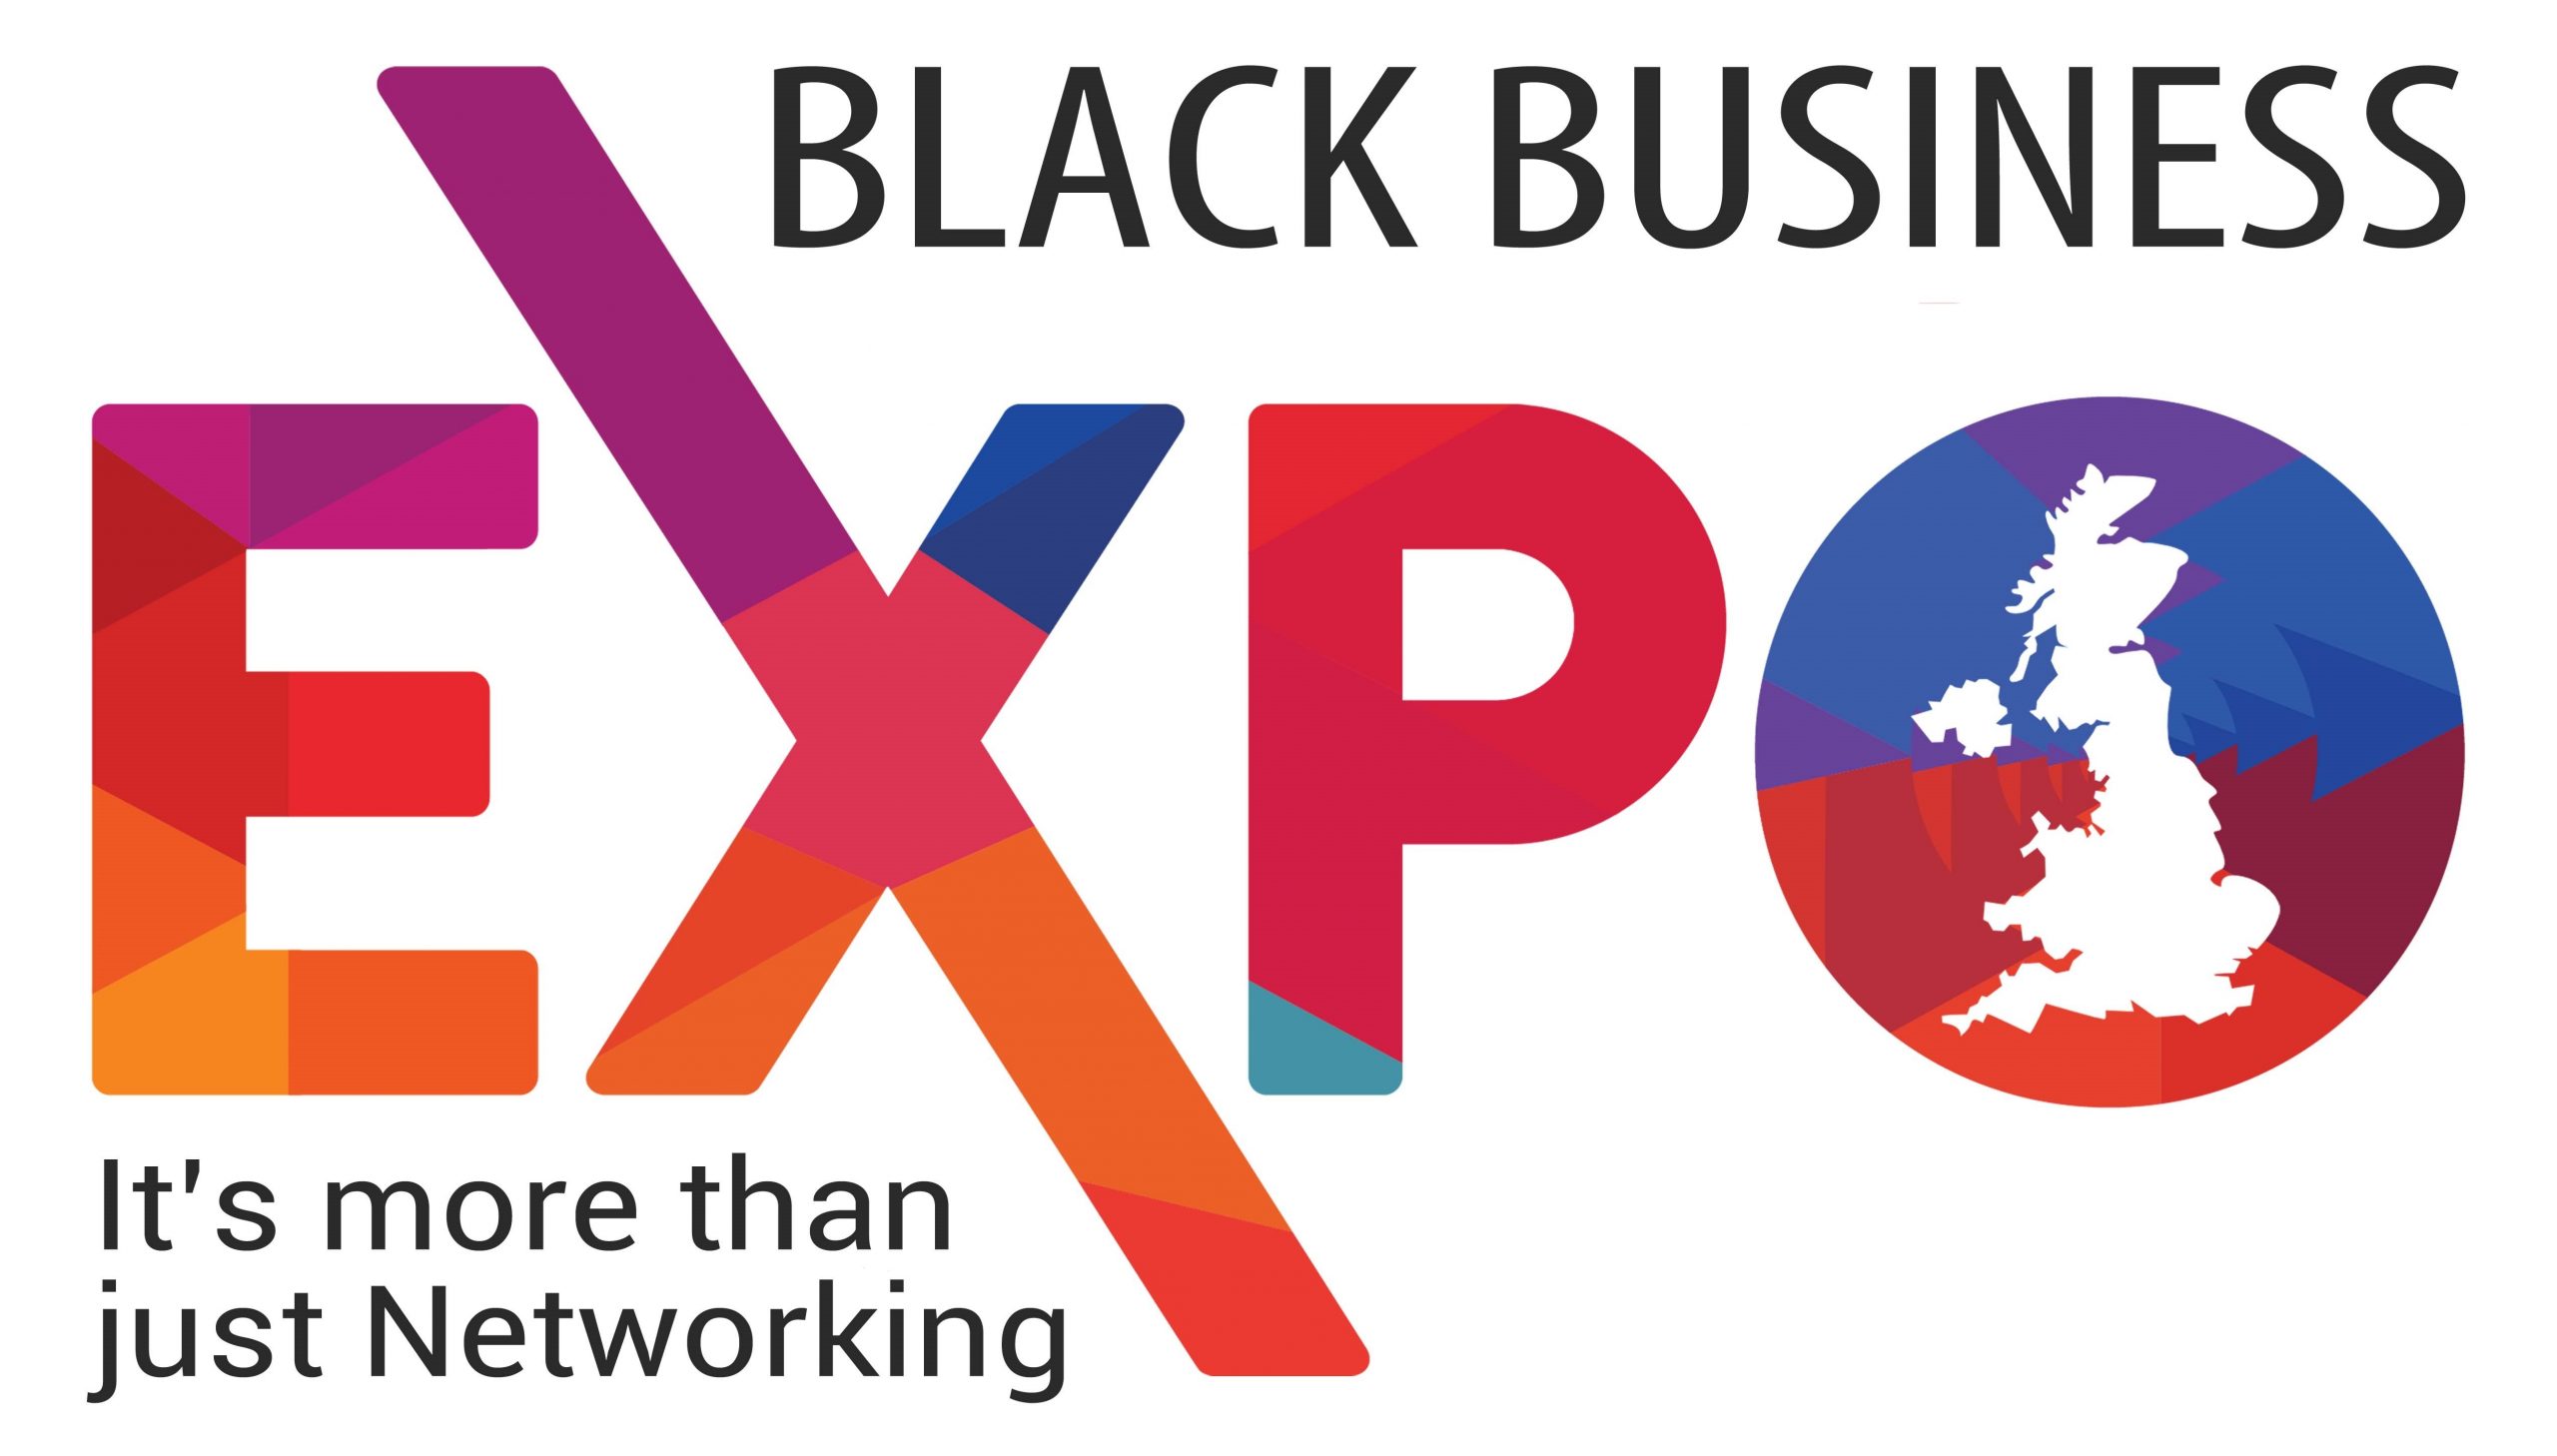 Black Business Expo Black2Business UK